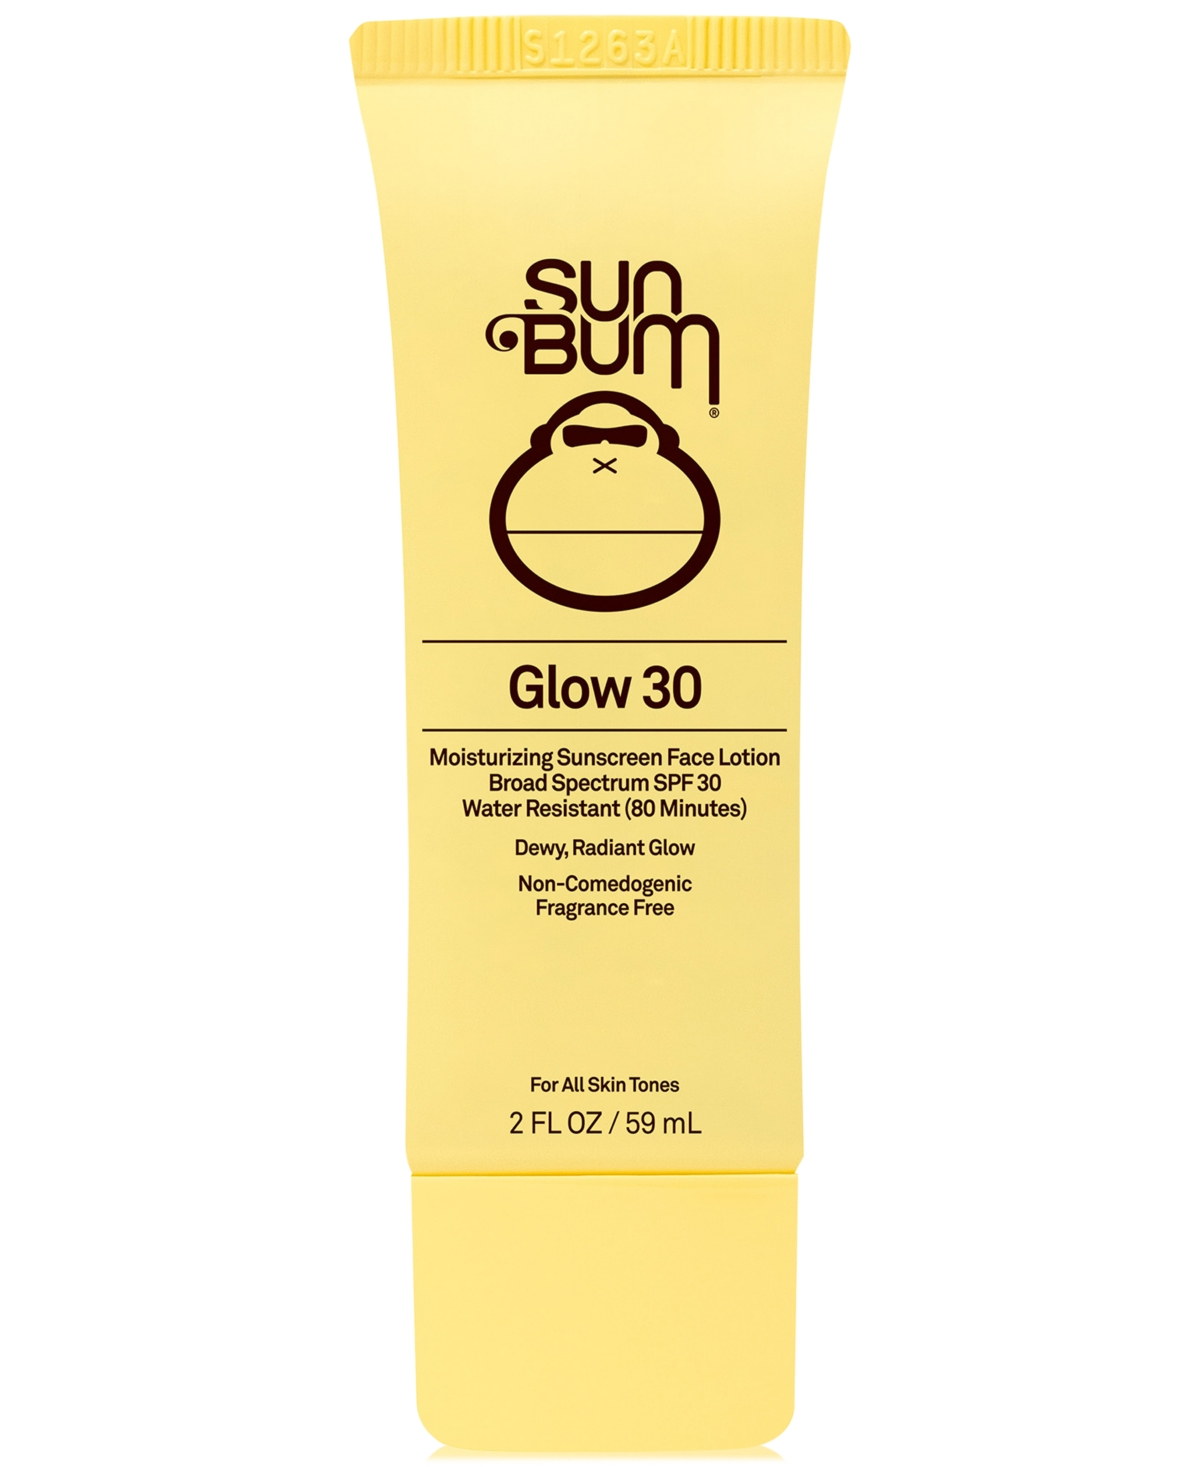 Original Glow 30 Moisturizing Sunscreen Face Lotion